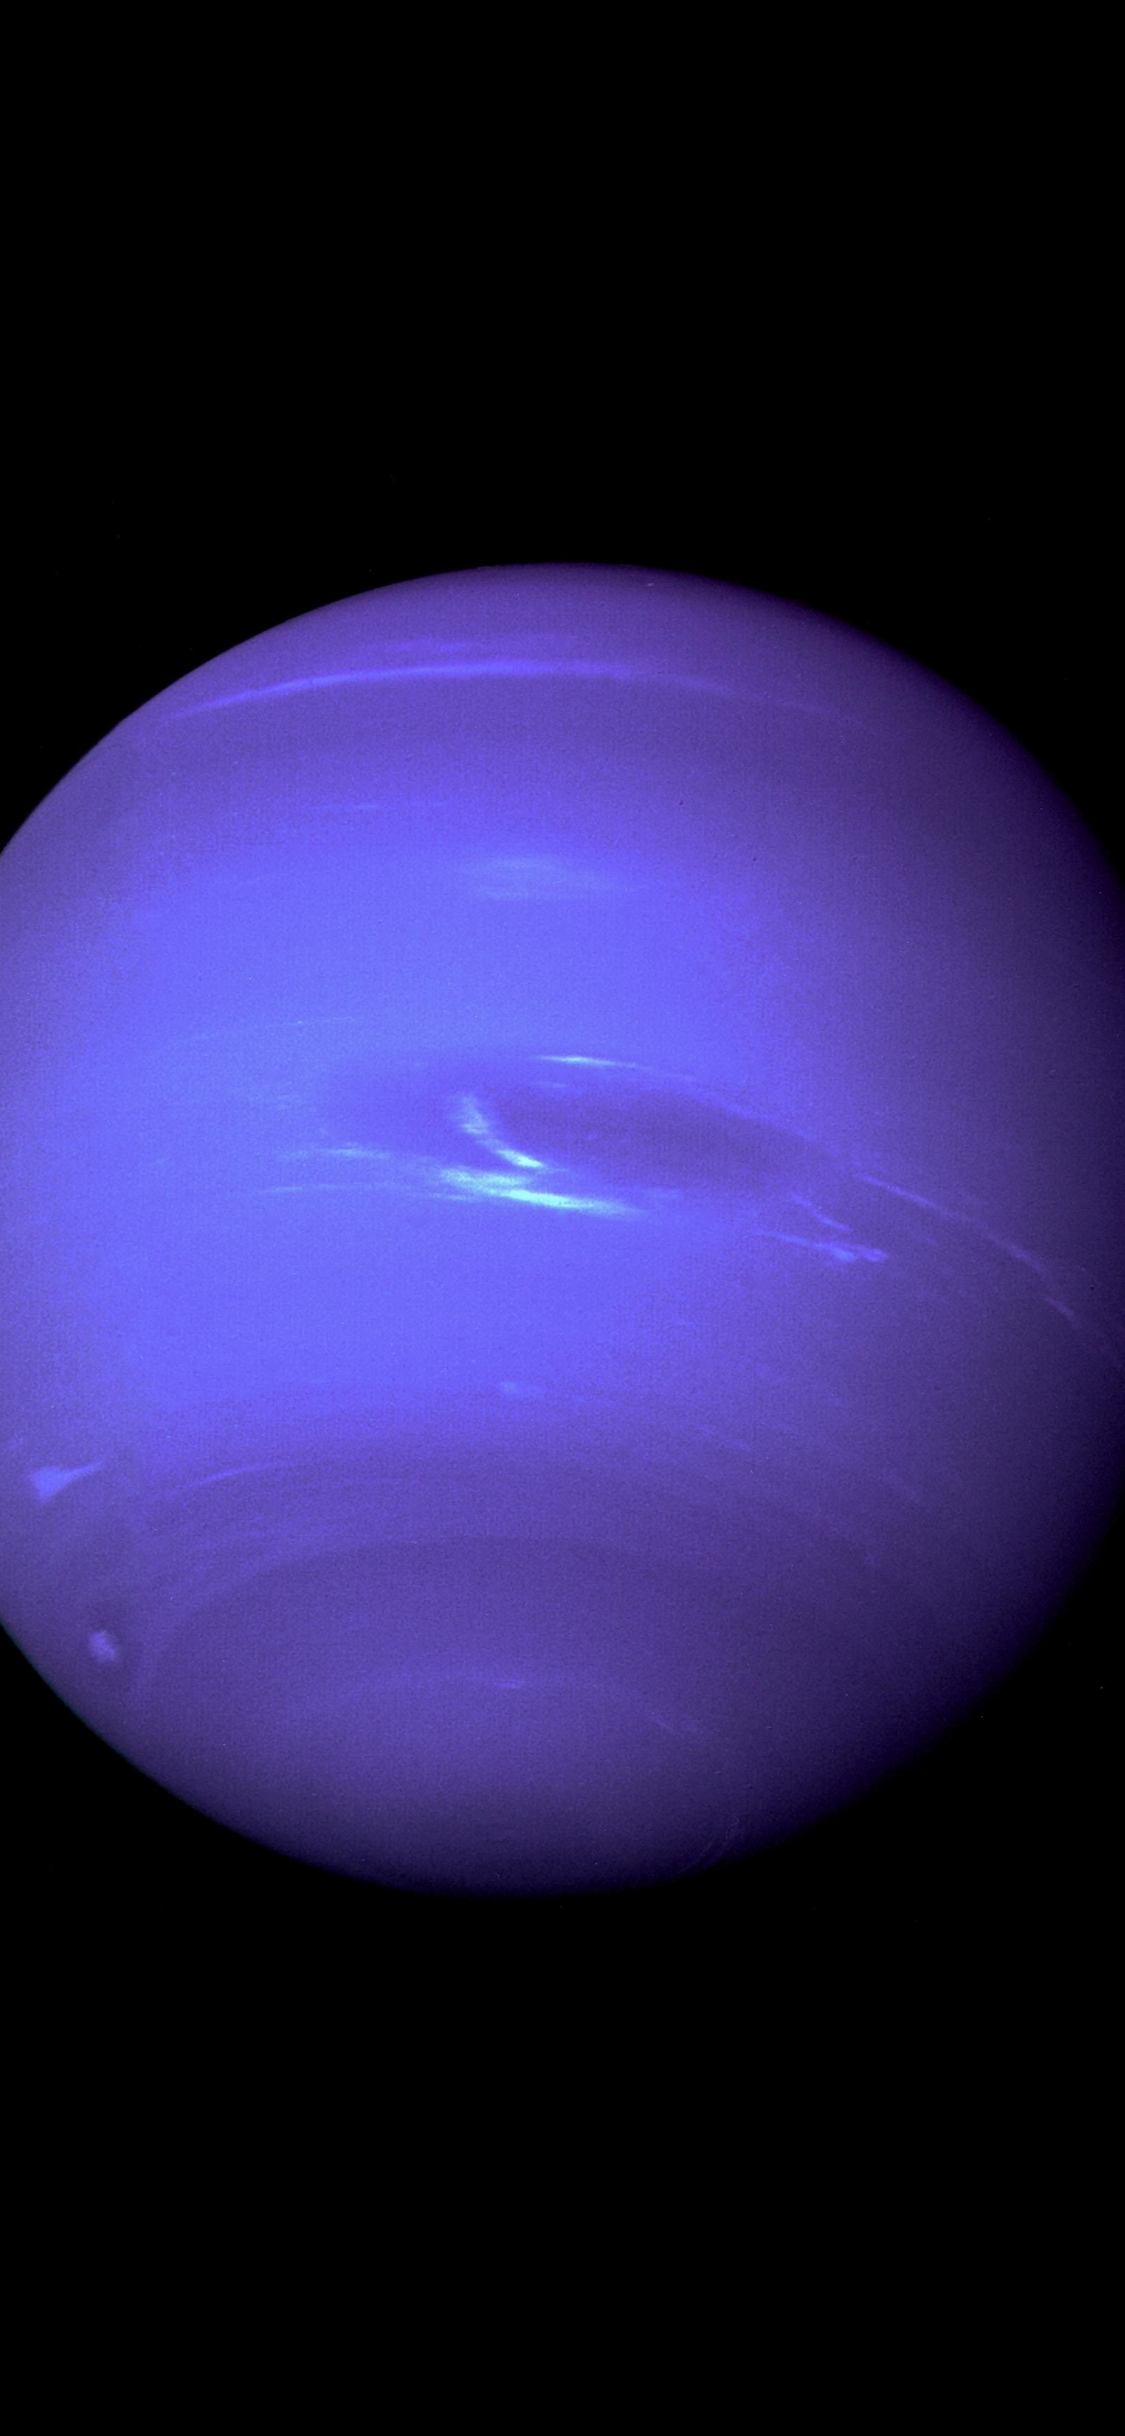 Download wallpaper 1125x2436 purple planet, telescopic view, iphone x,  1125x2436 hd background, 26884